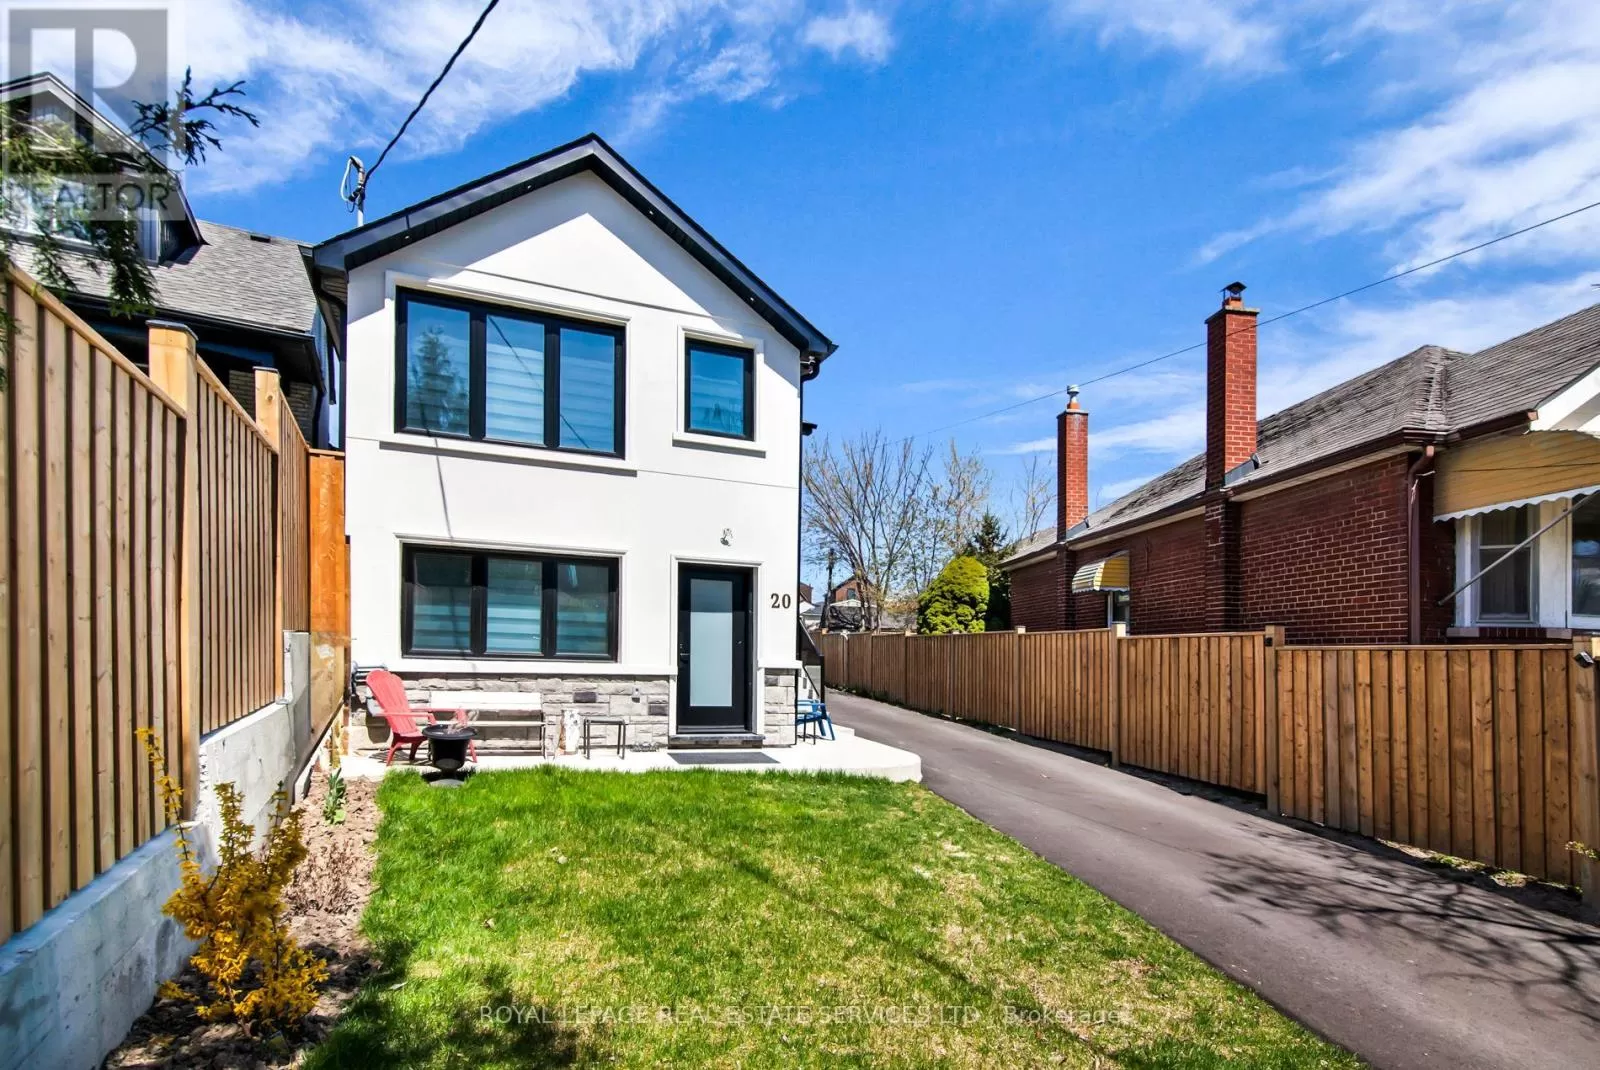 House for rent: 20 Kenora Crescent, Toronto, Ontario M6M 1C6